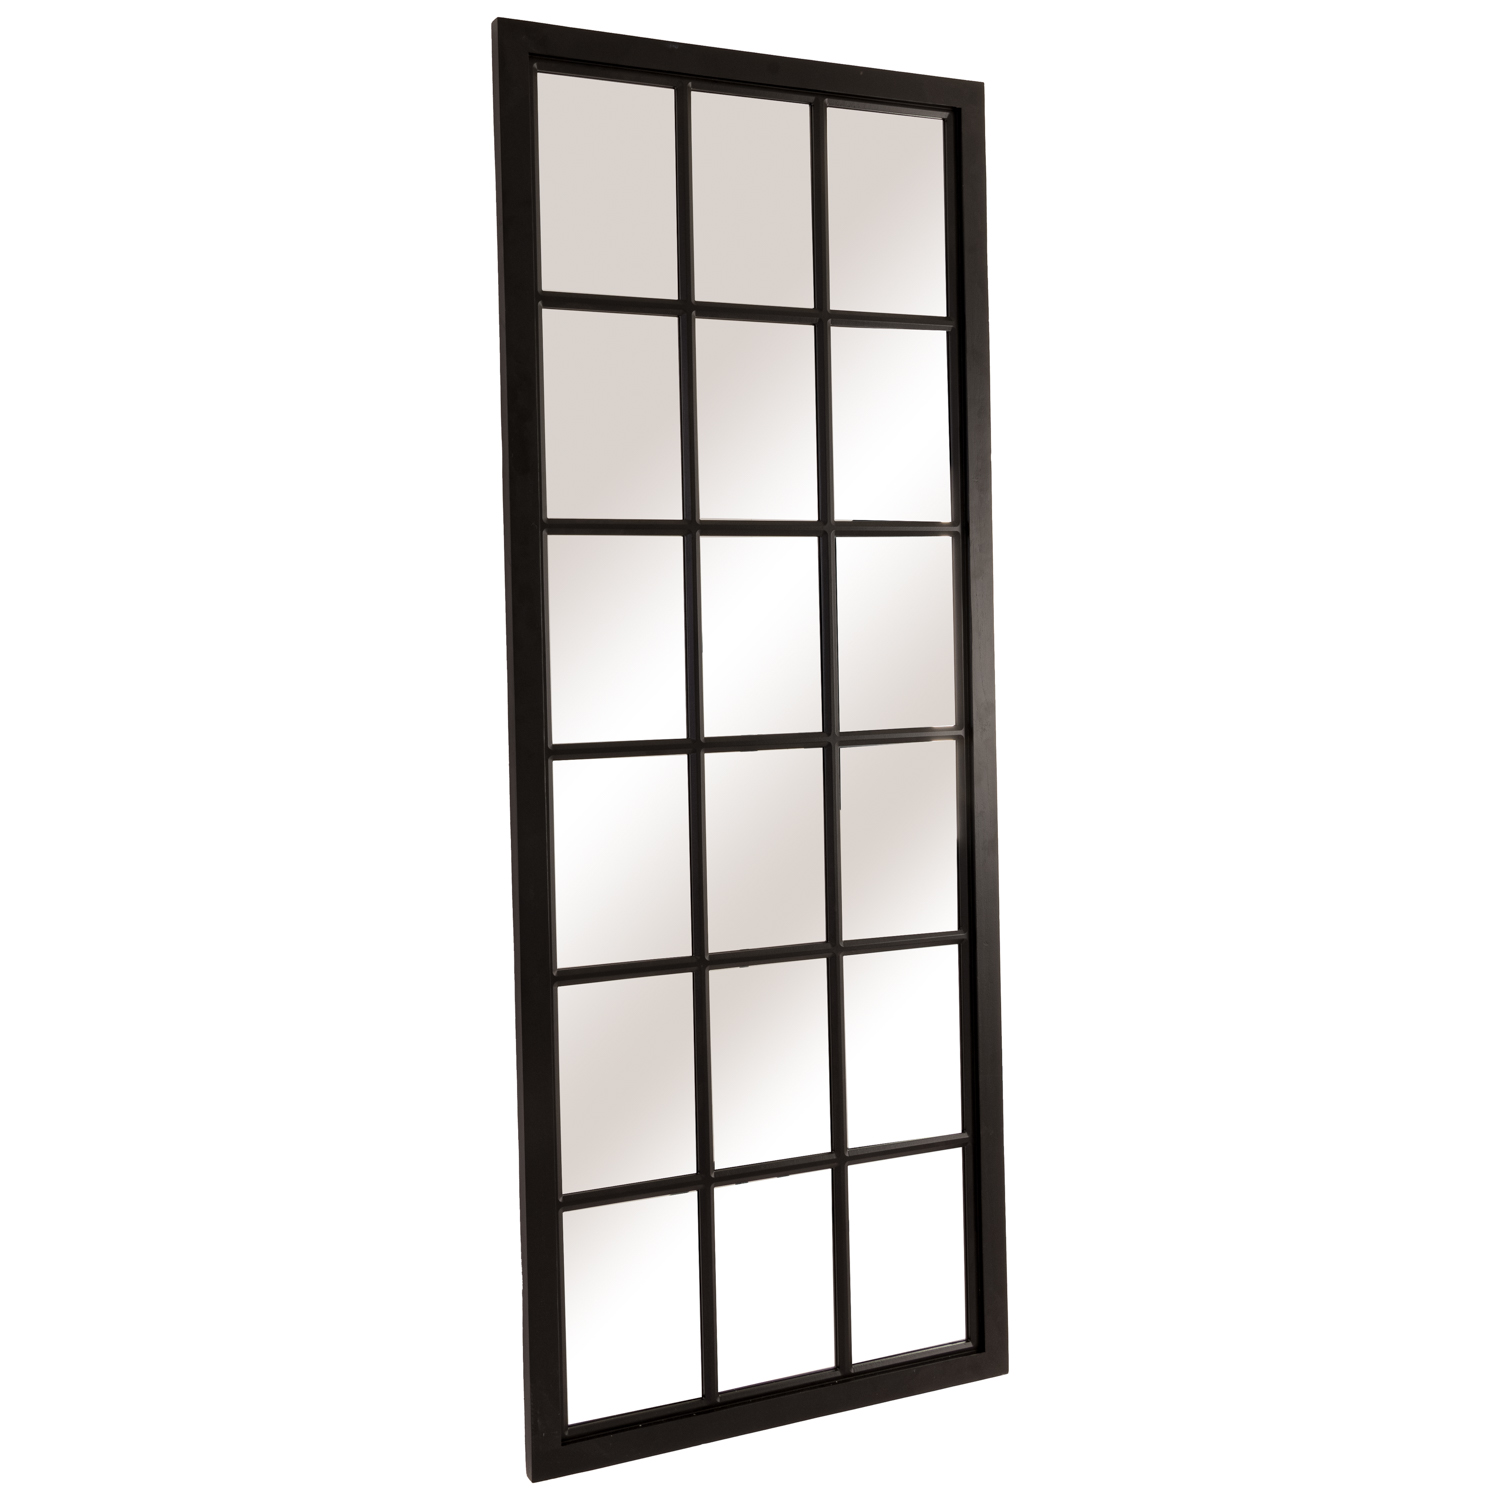 Tall Black Wooden Window Mirror - Image 2